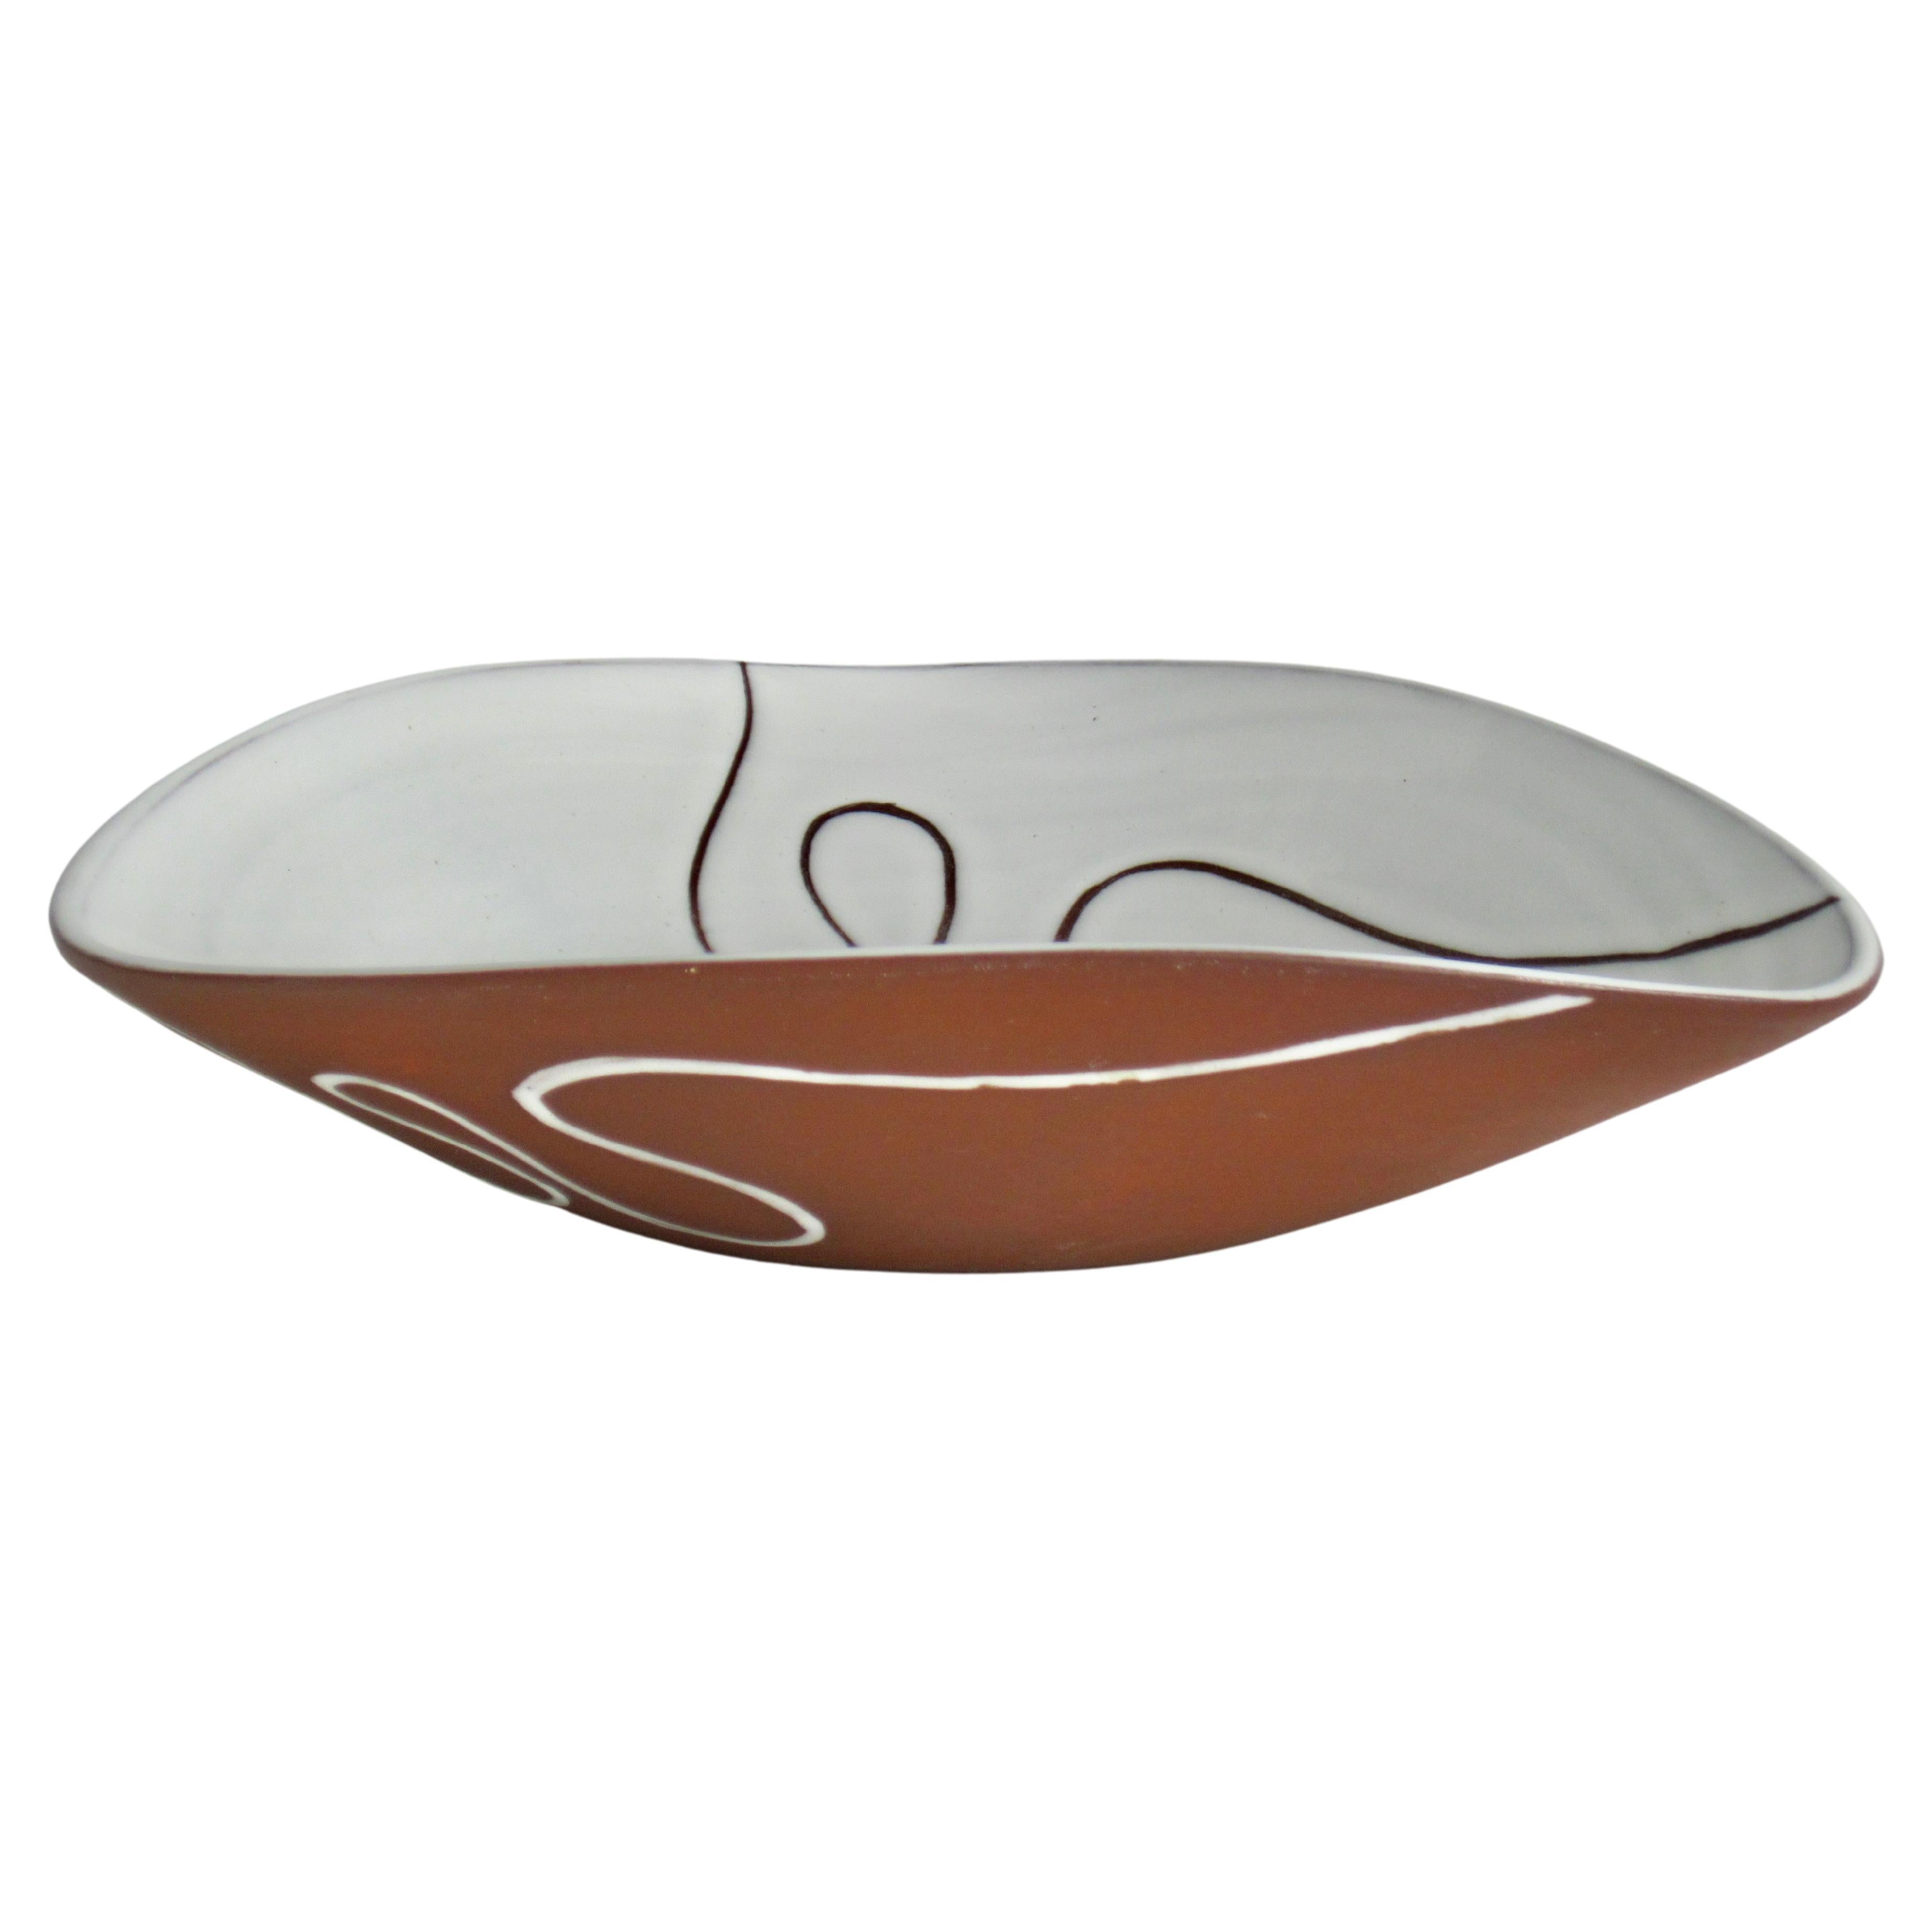 Haemstede Holland Minimalist Ceramic Bowl For Sale